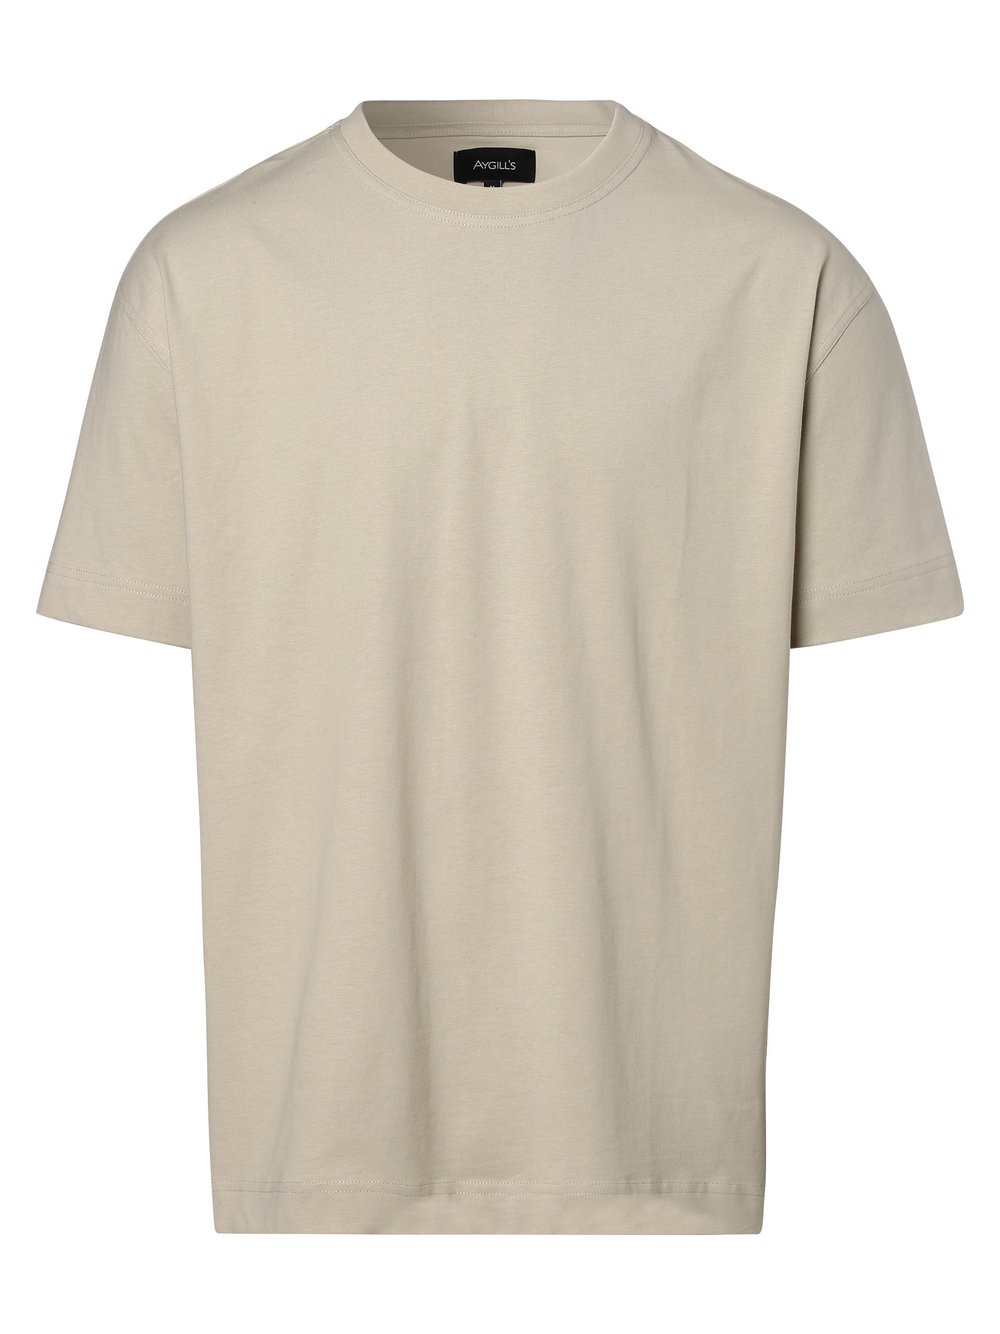 Aygill's - T-shirt męski, beżowy|szary